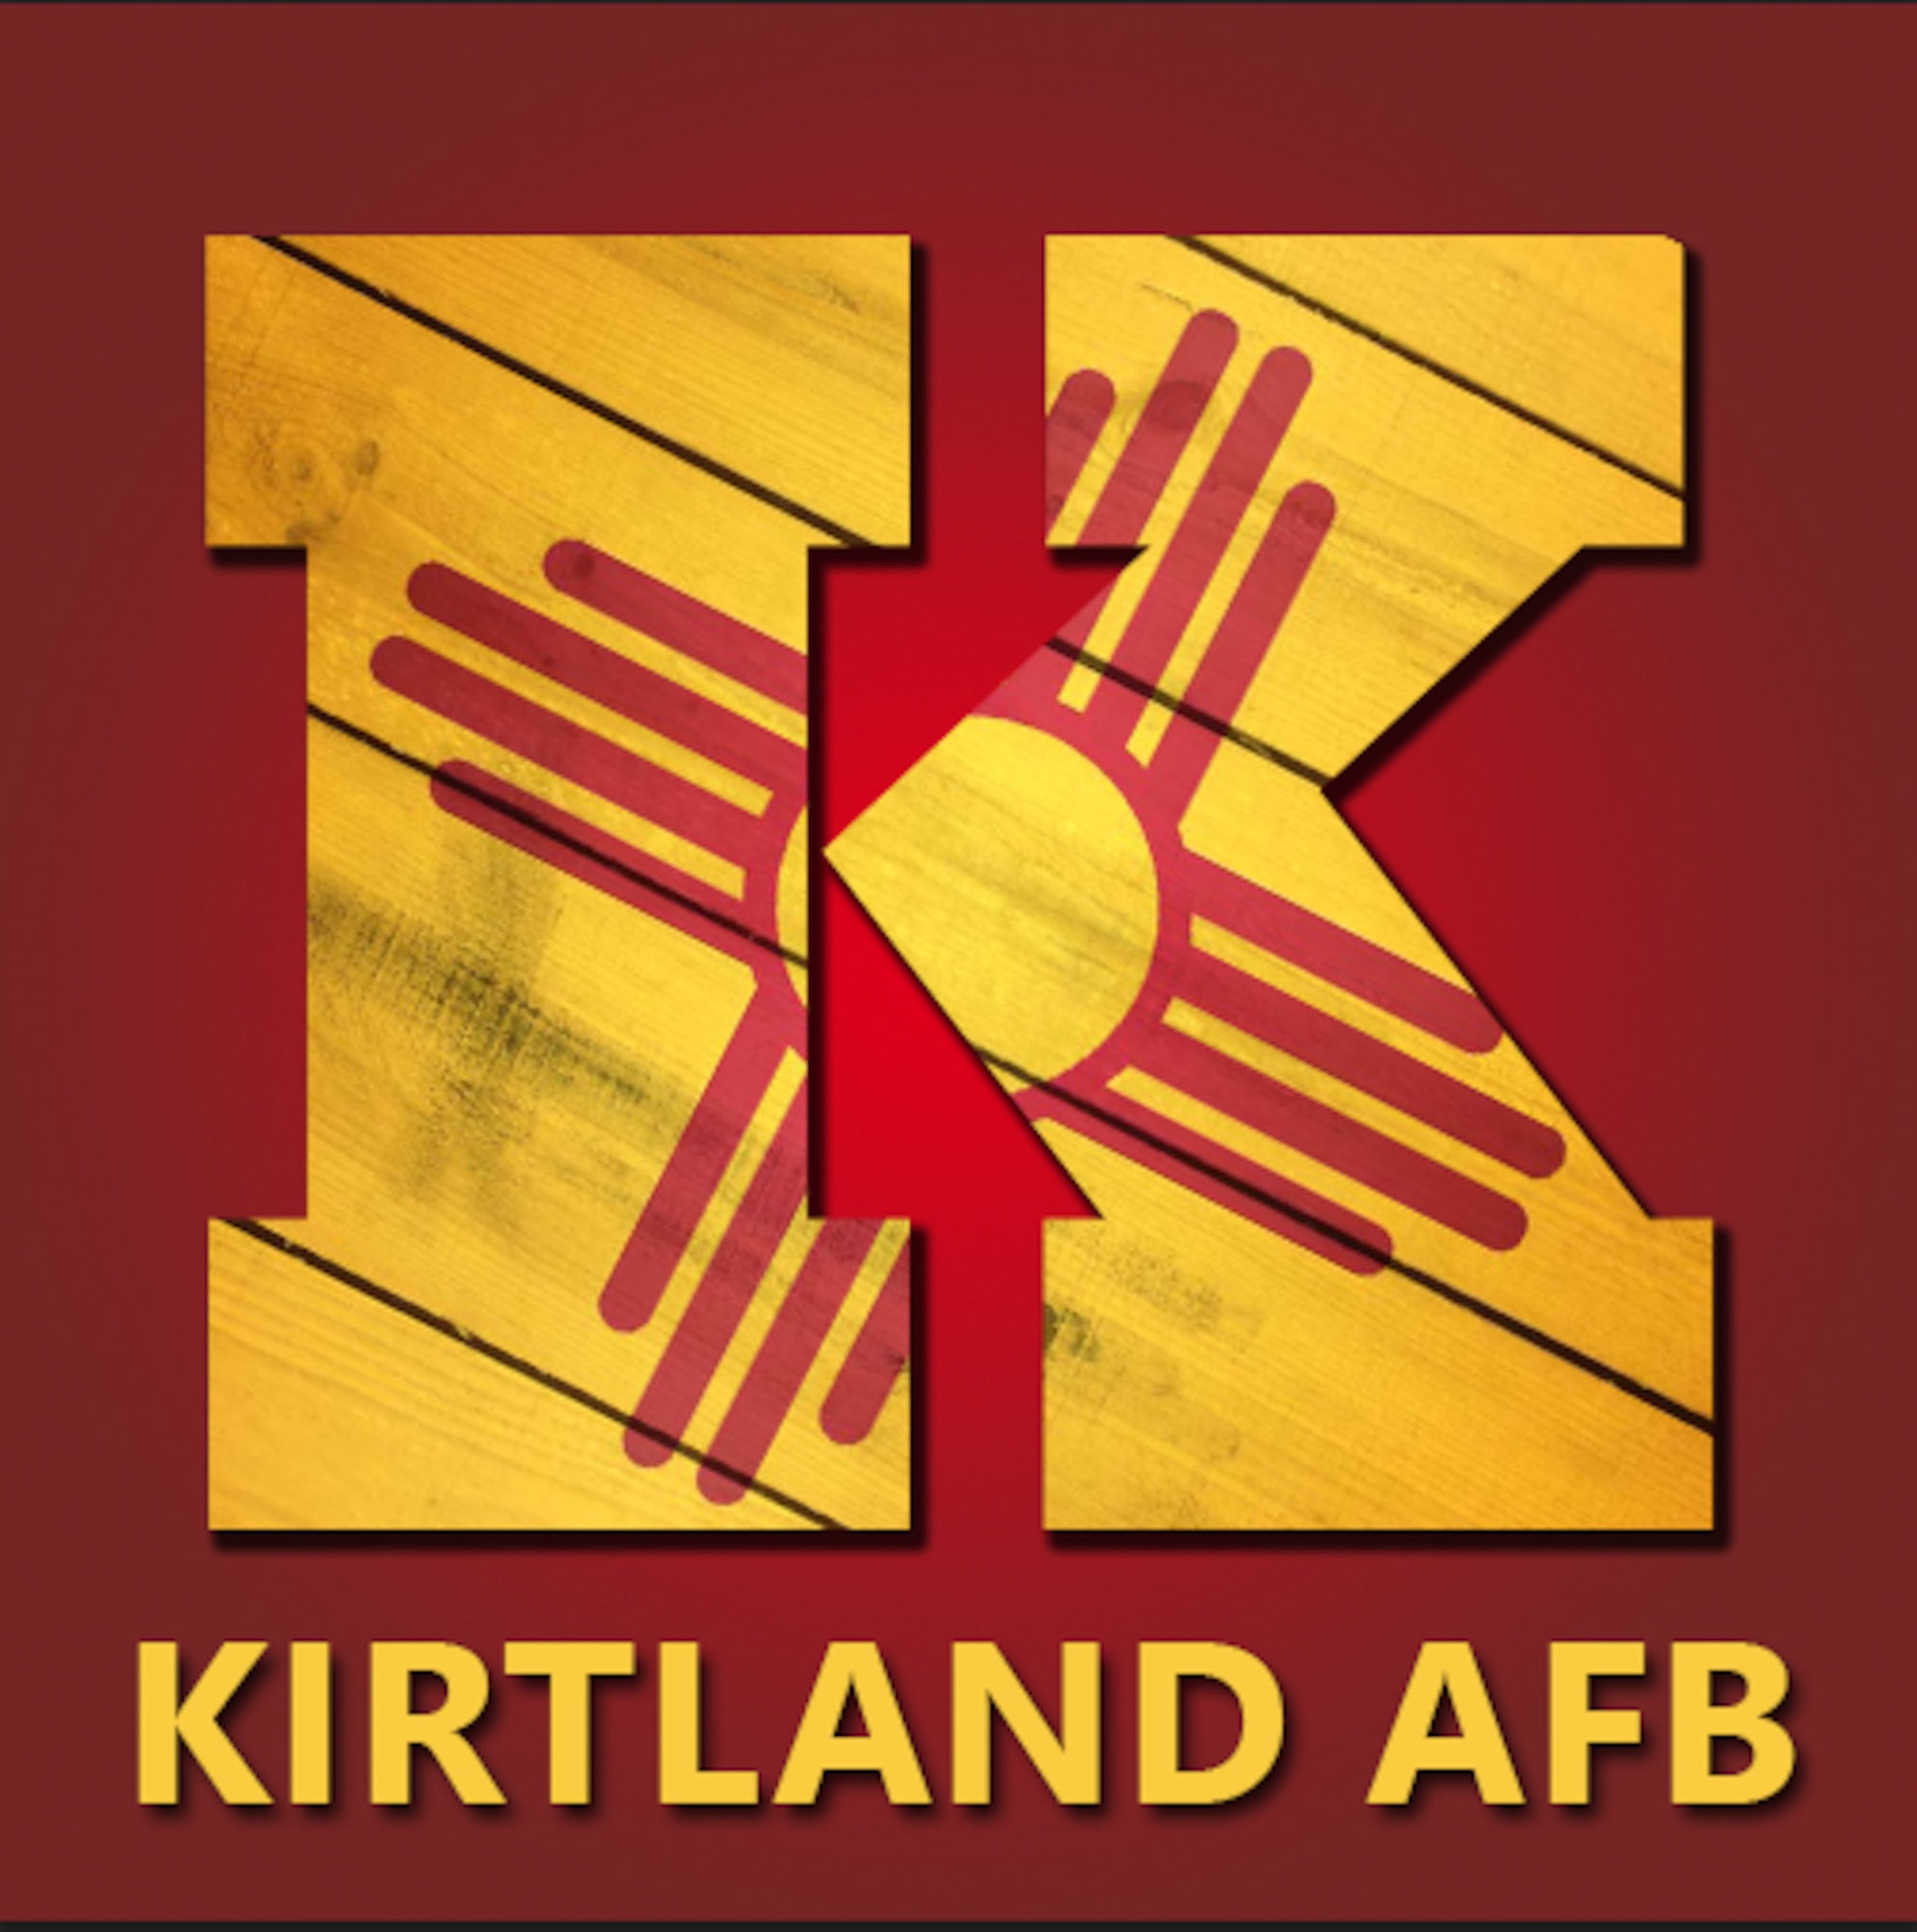 Kirtland Air Force Base App Logo.
(U.S. Air Force graphic by Senior Airman Bethany La Ville)